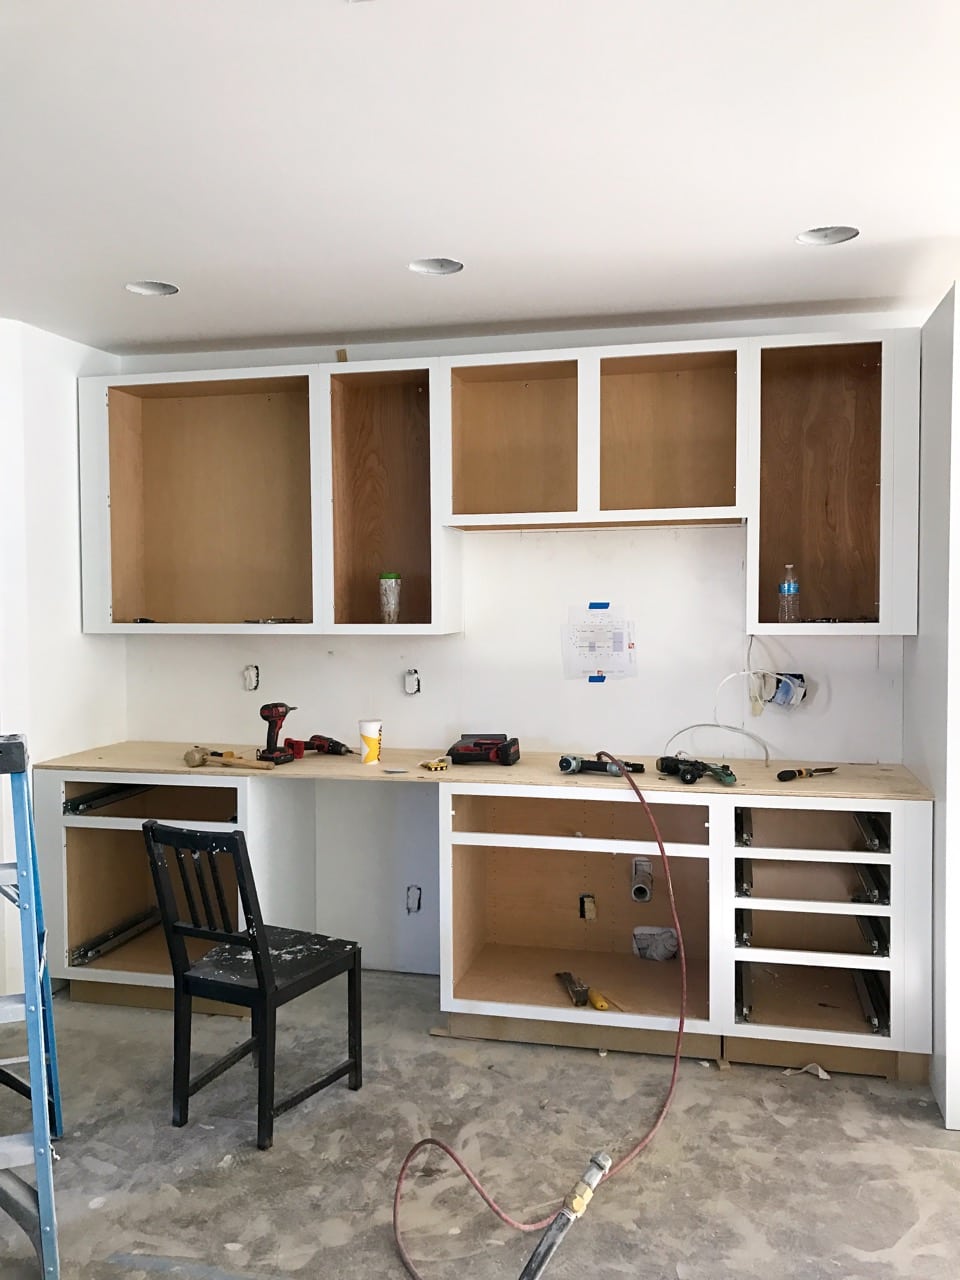 Installation of new kitchen cabinets